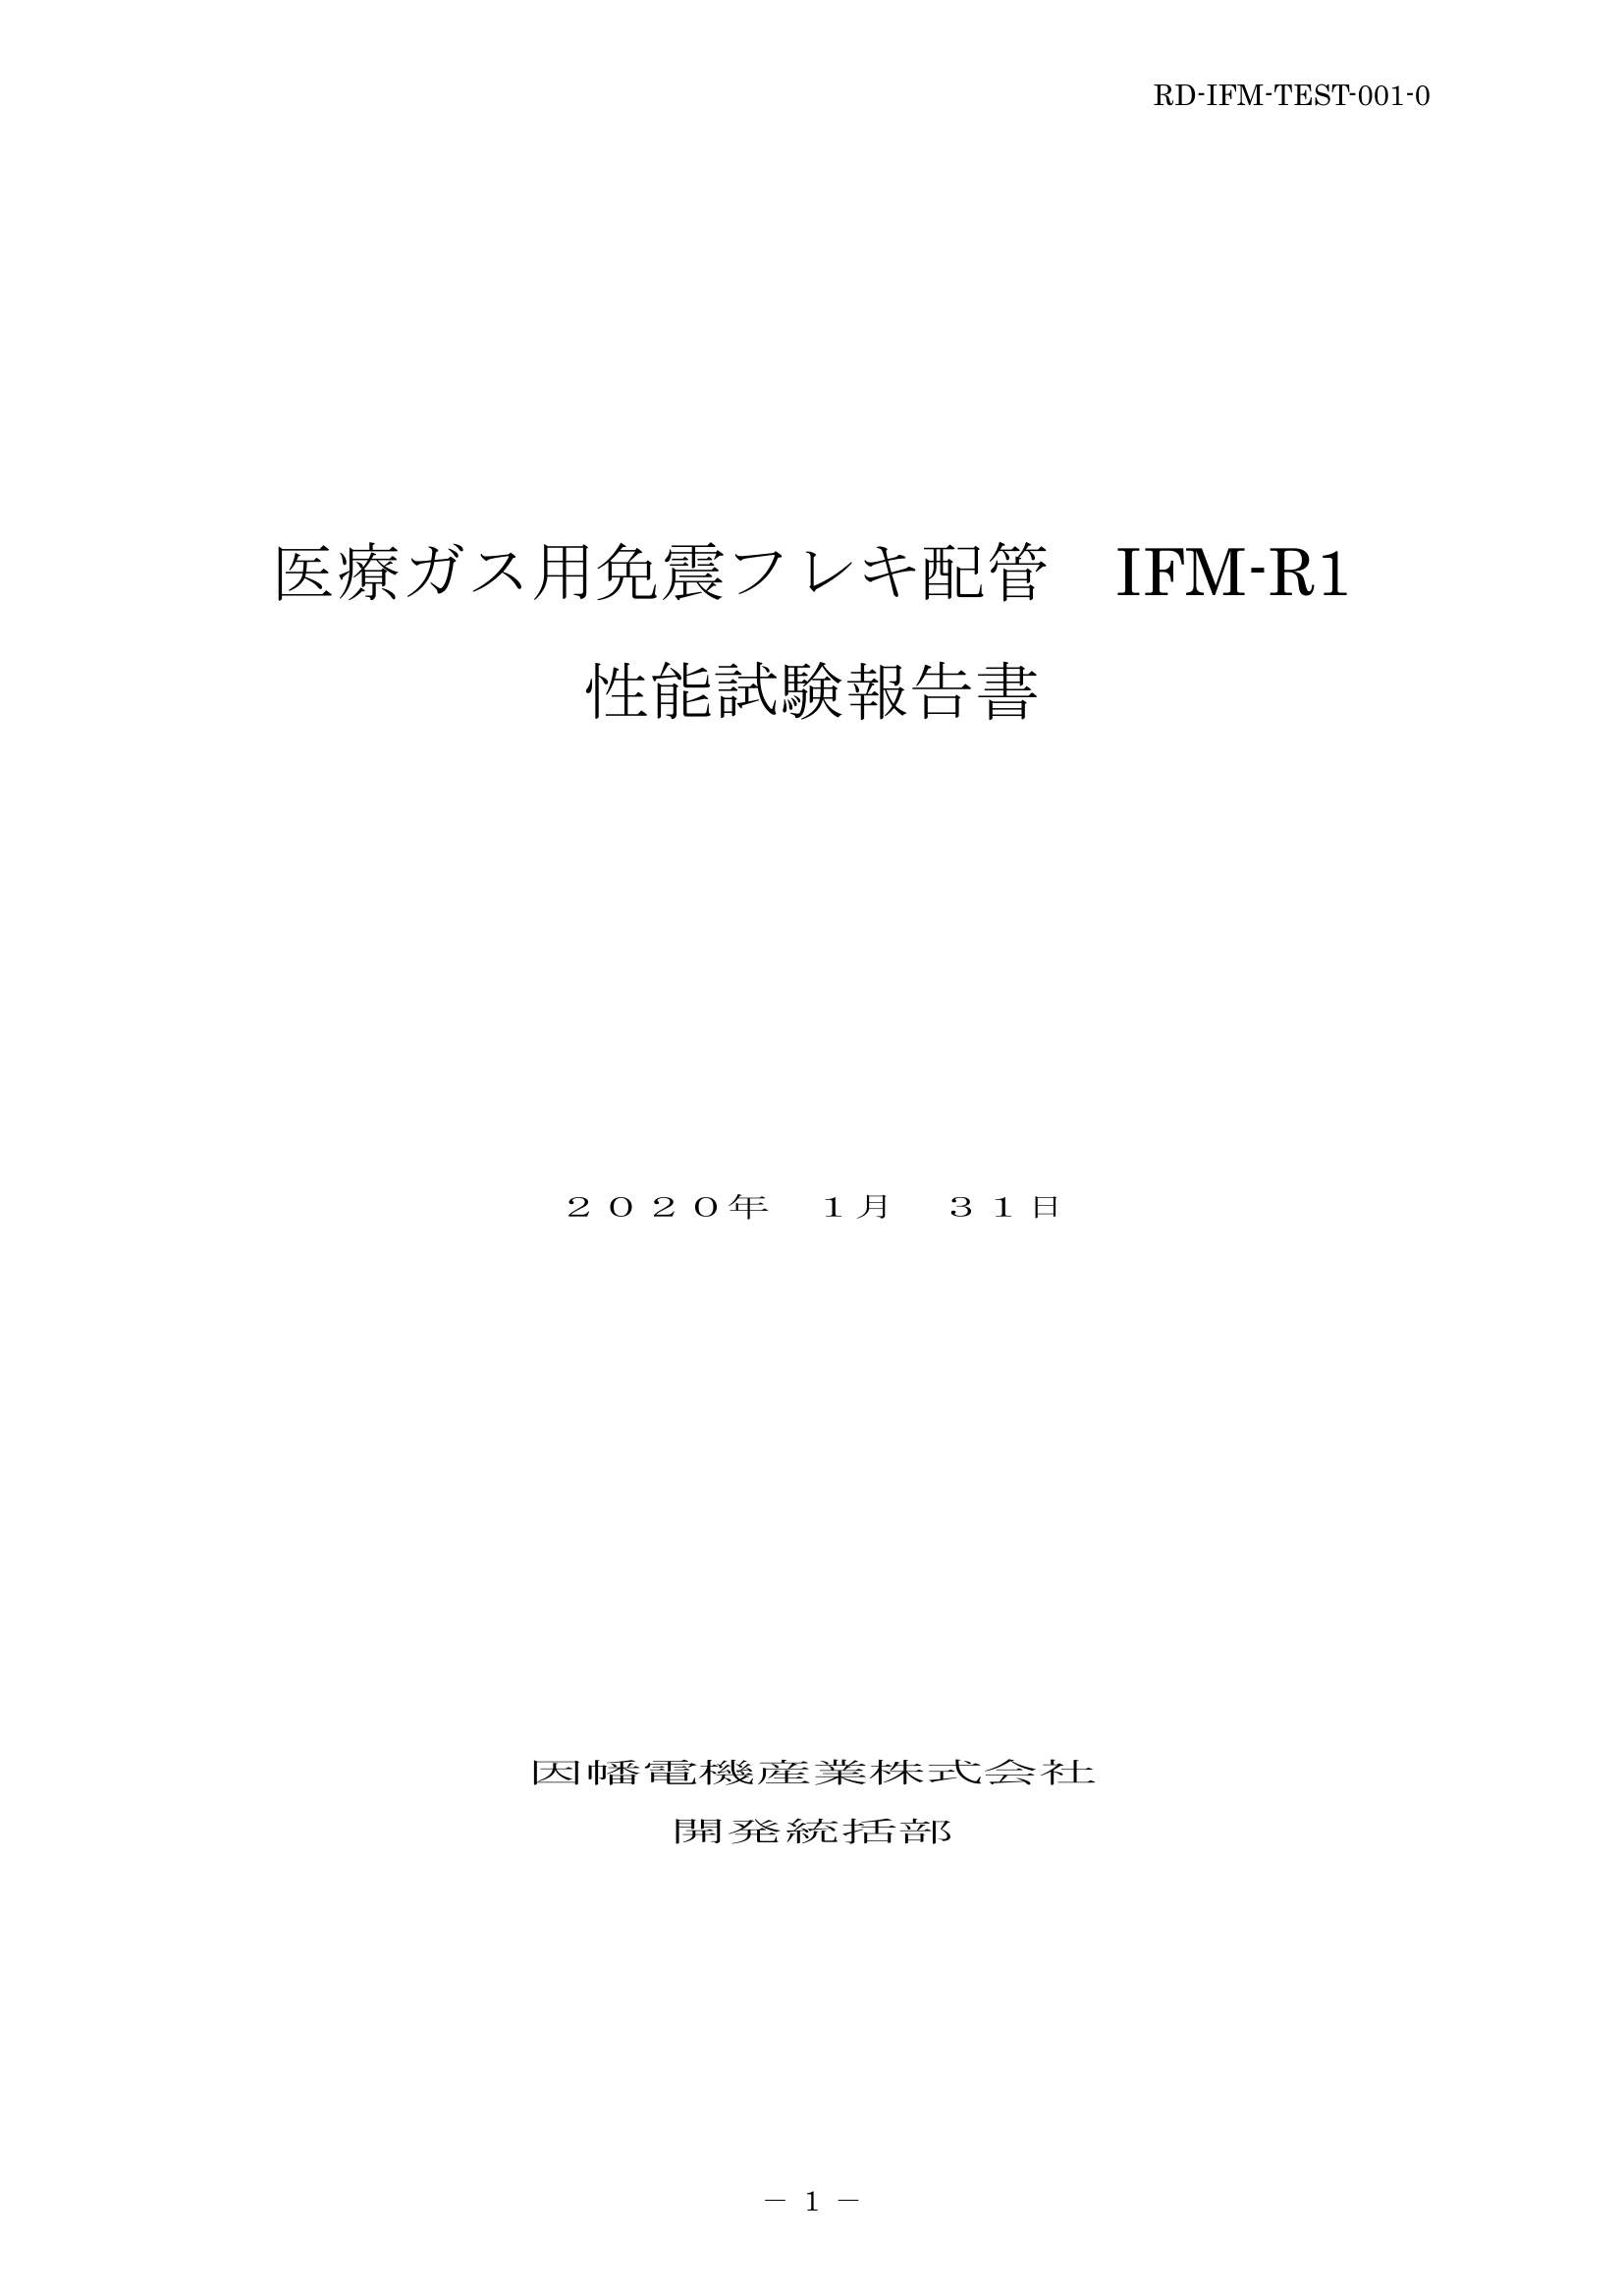 IFM_性能試験報告書_20200131.pdf